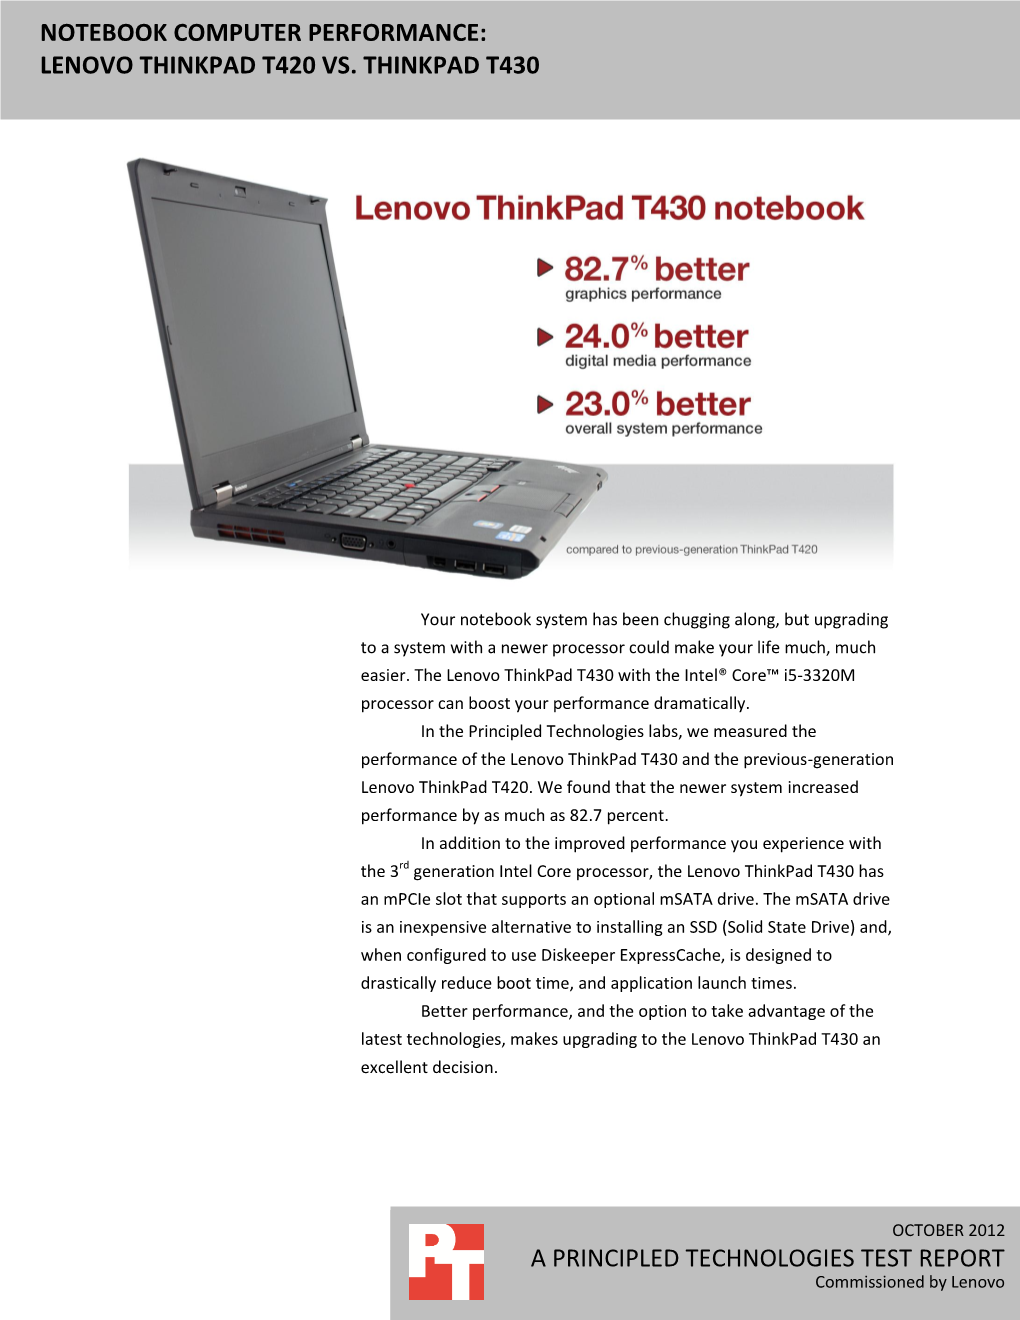 Notebook Computer Performance: Lenovo Thinkpad T420 Vs